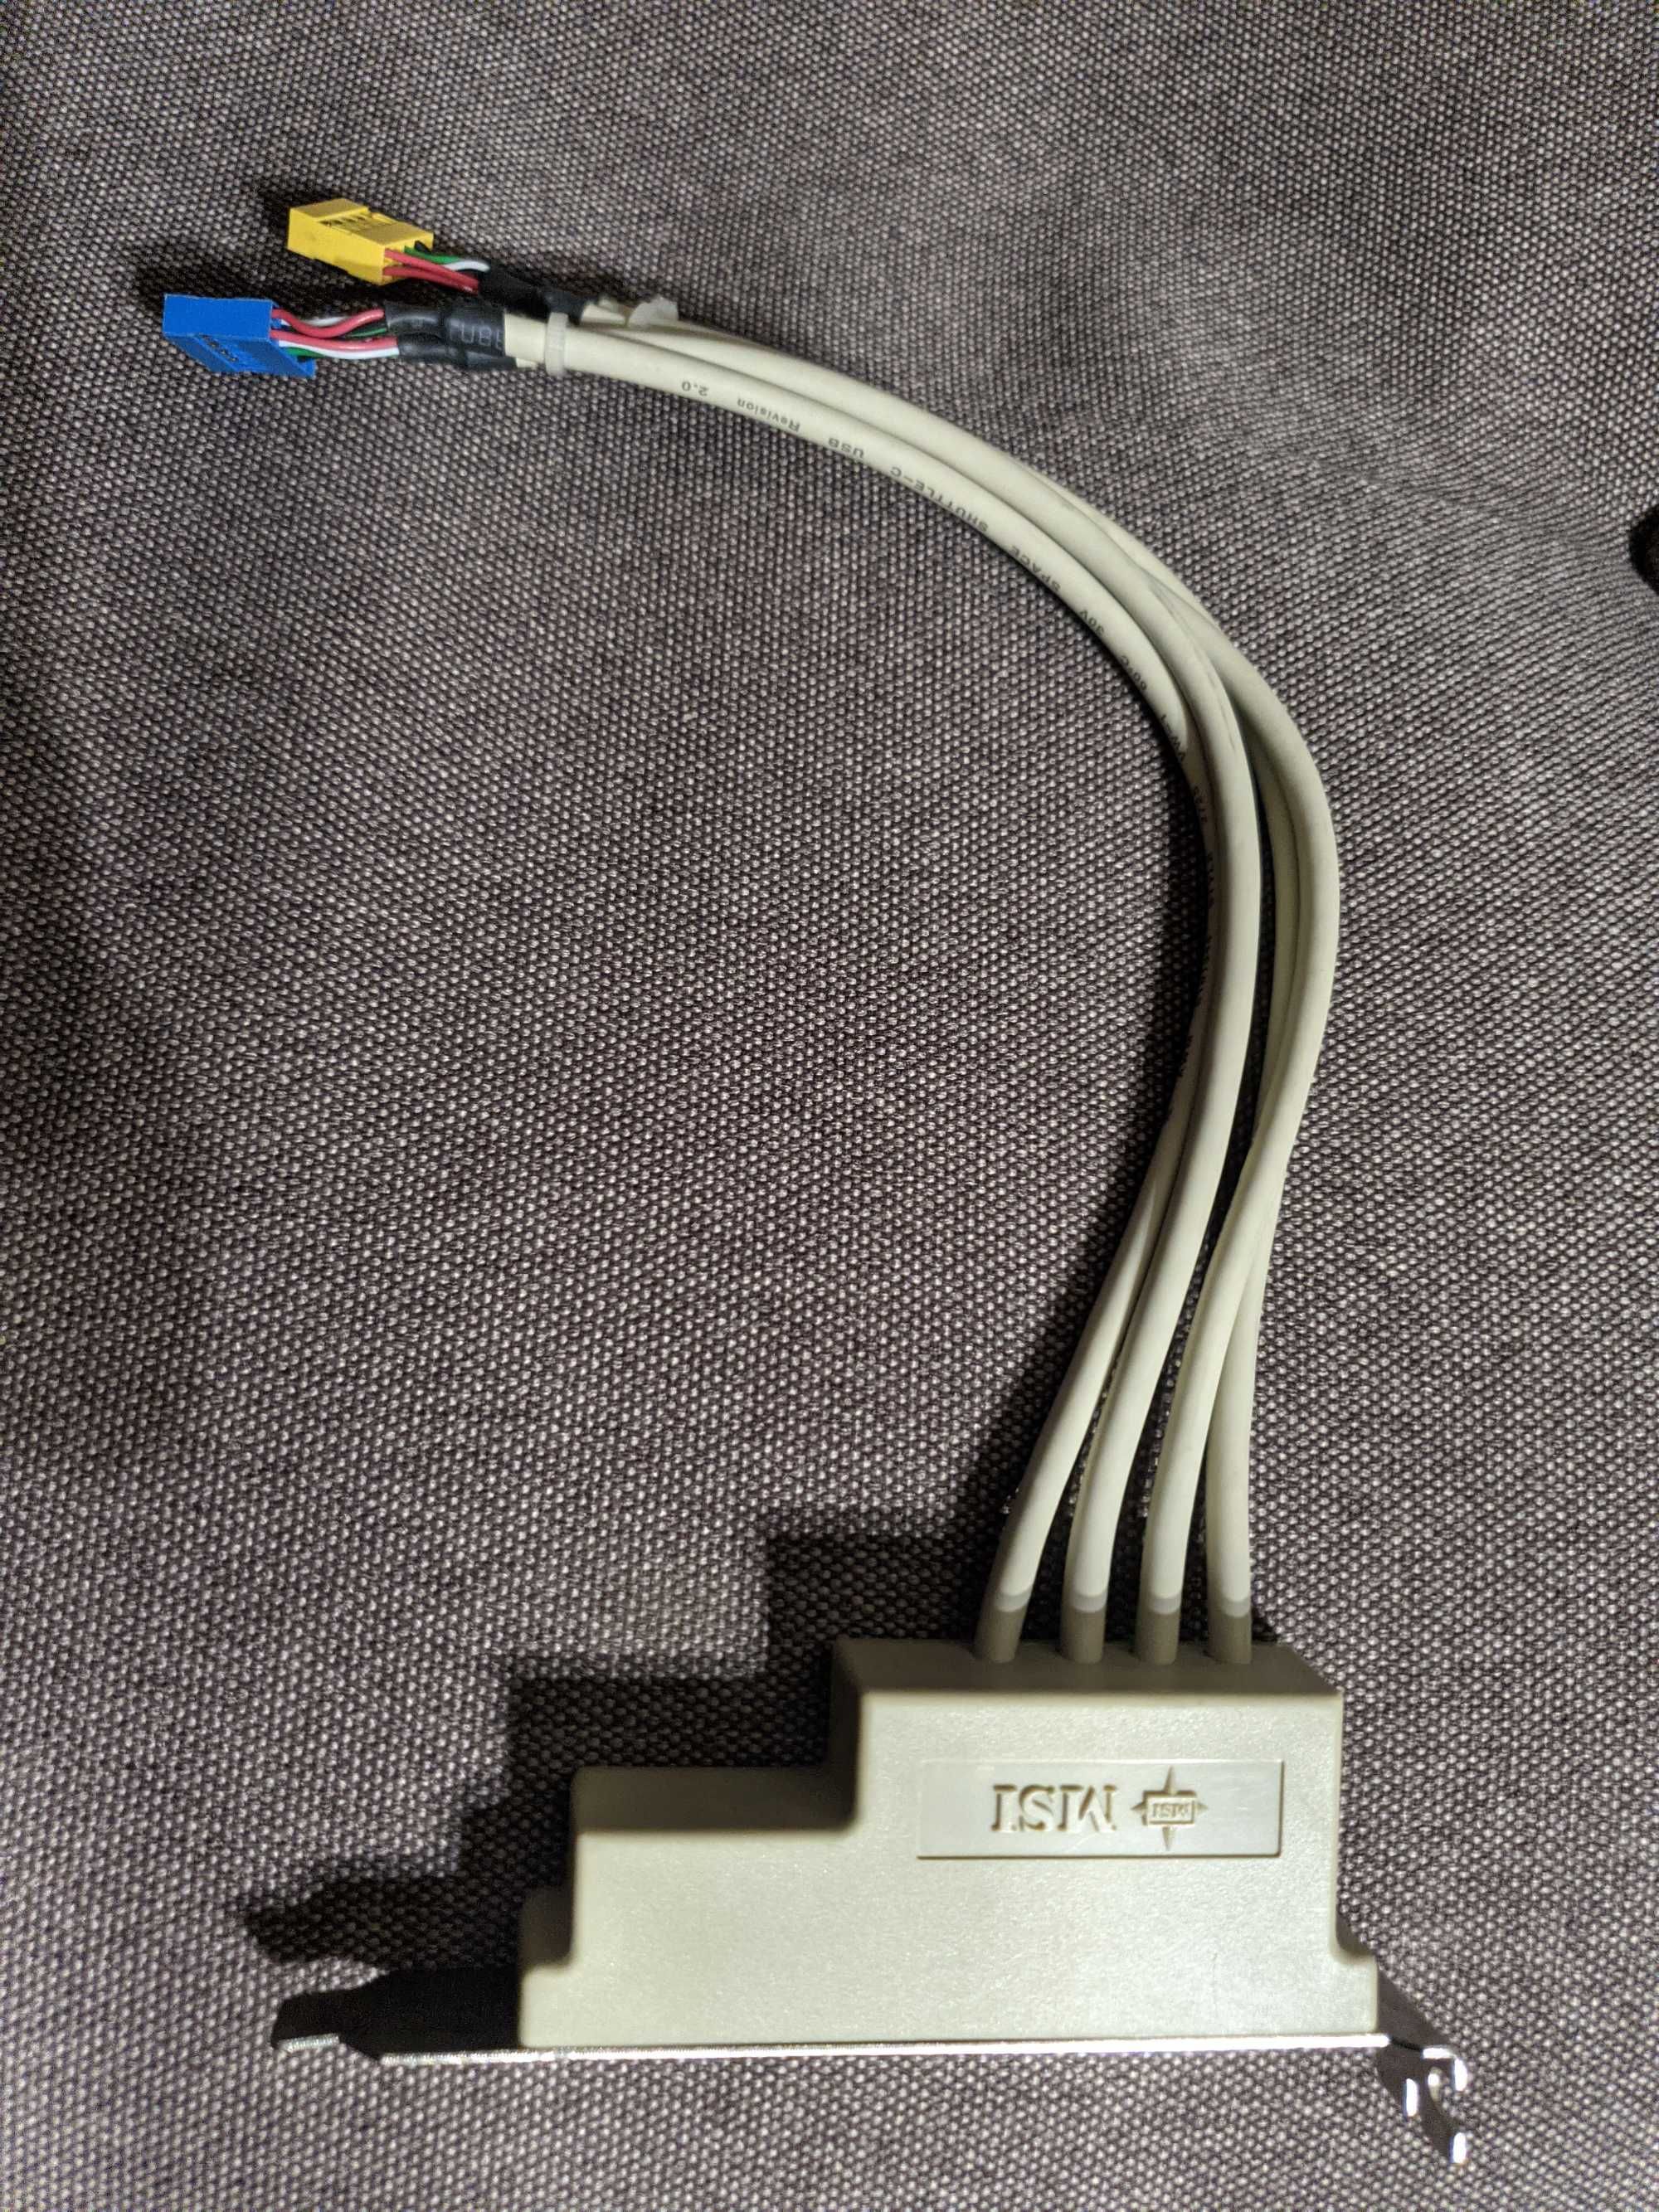 USB-хаб MSI 4USB порта